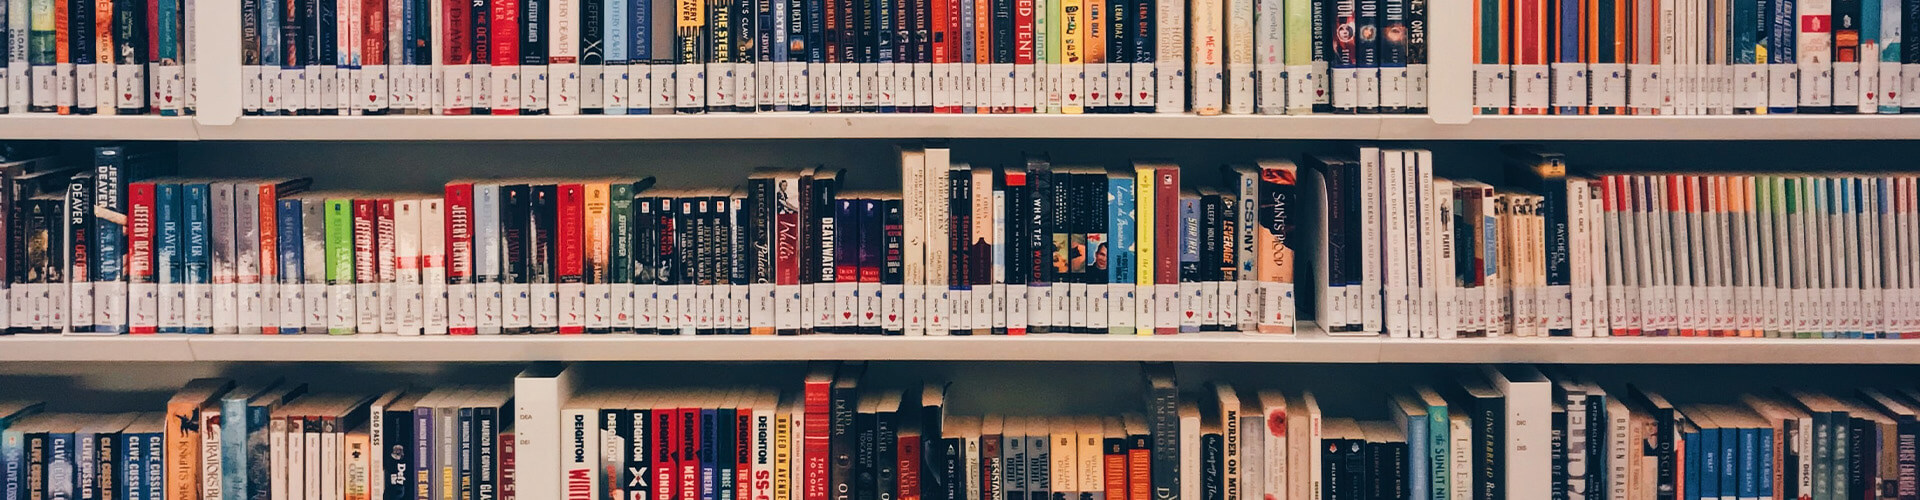 textbooks on a shelf